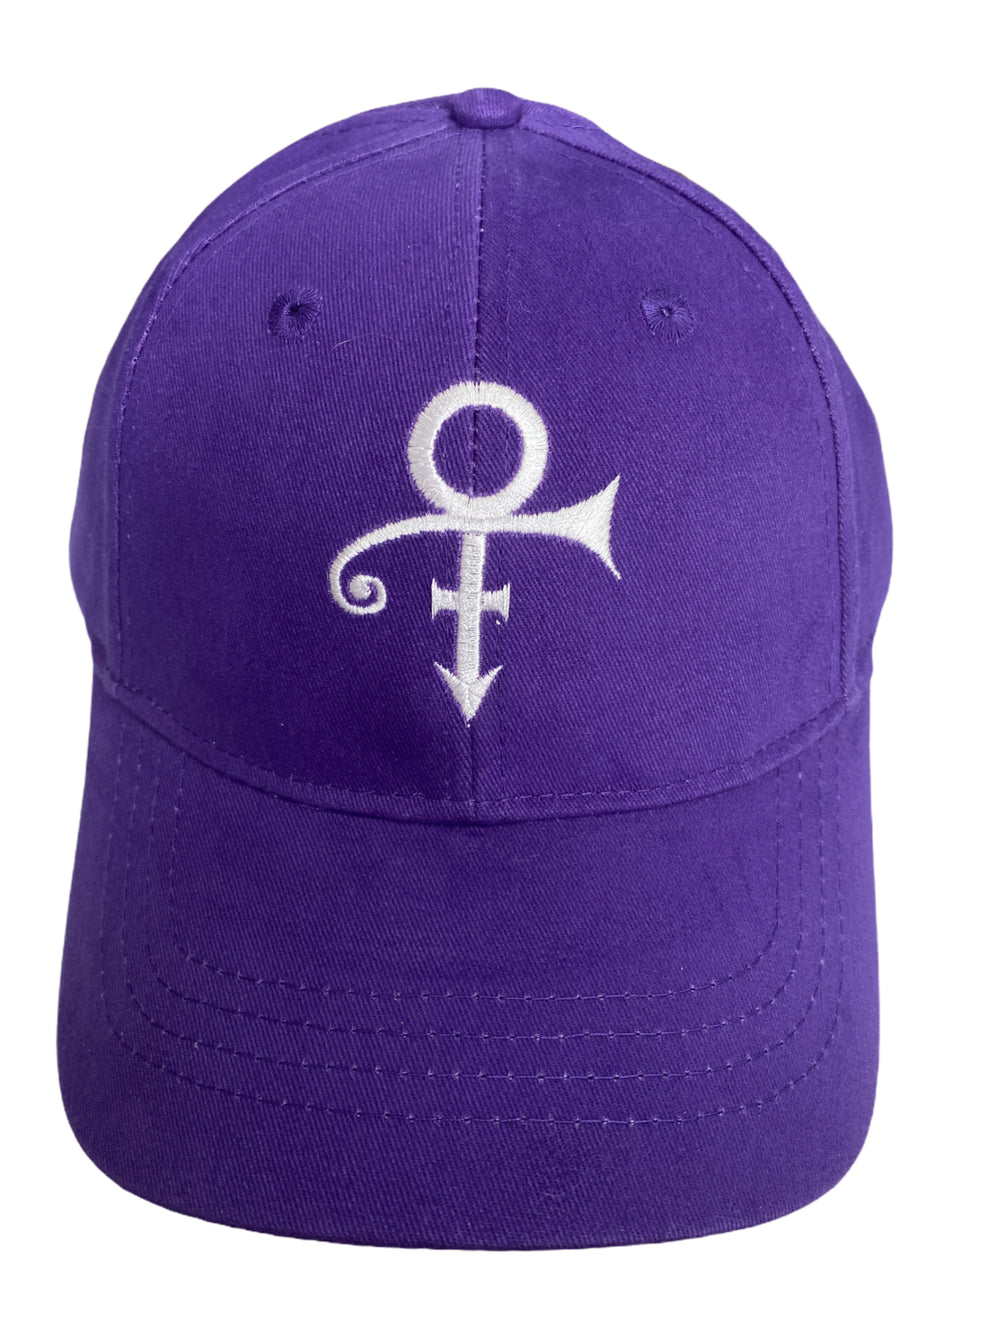 Prince – Love Symbol Purple Rain Name Official Peak Cap Purple With White Embroidery